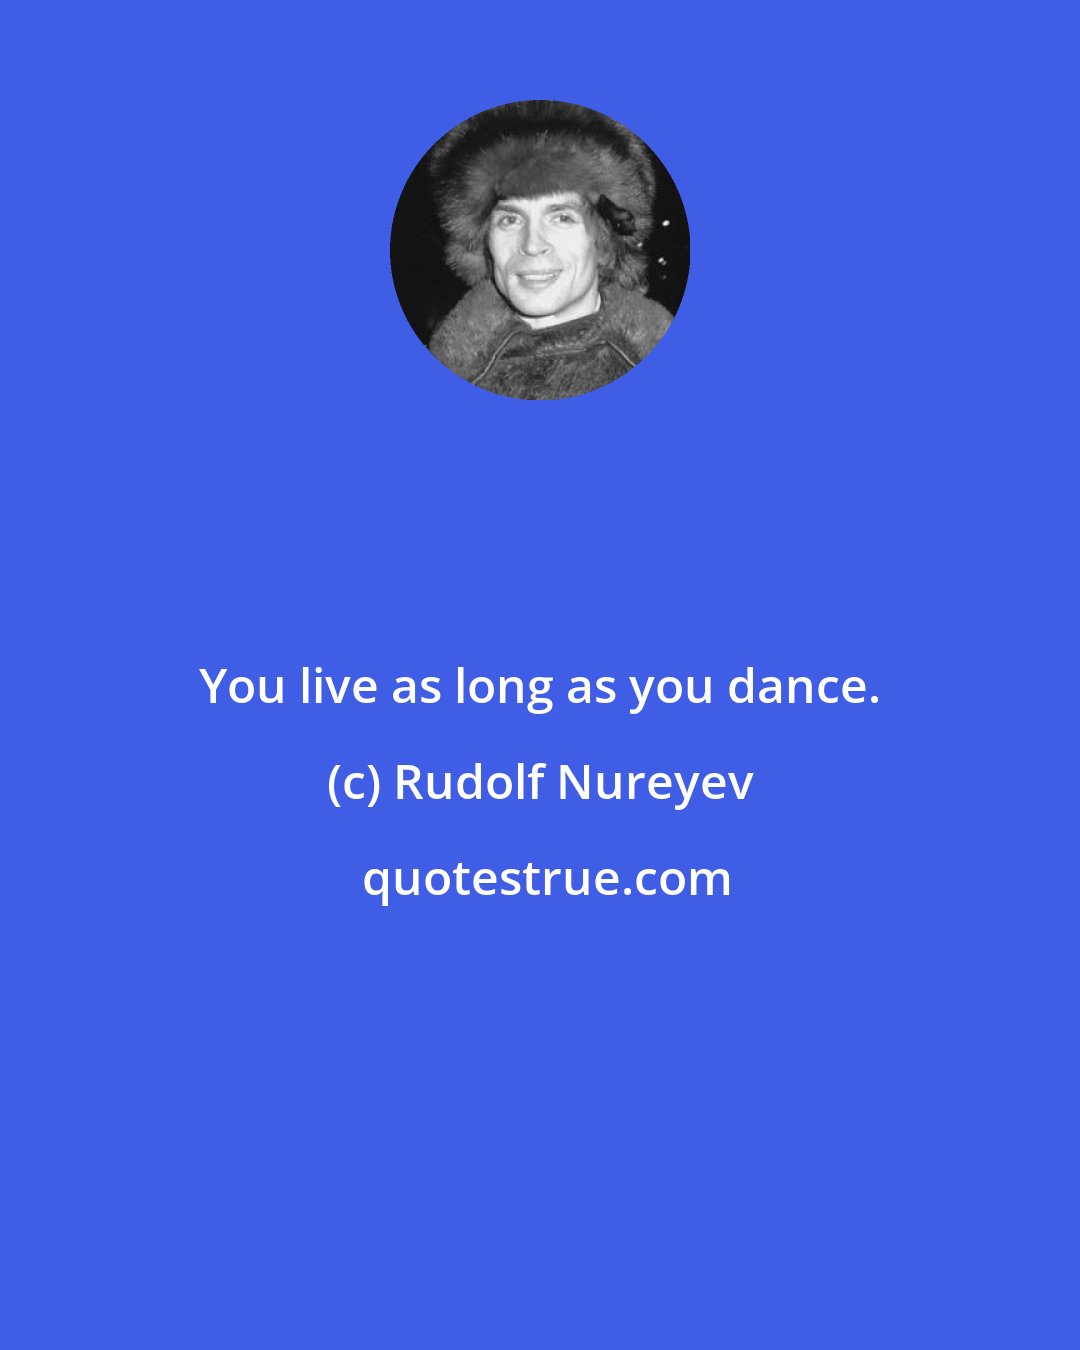 Rudolf Nureyev: You live as long as you dance.